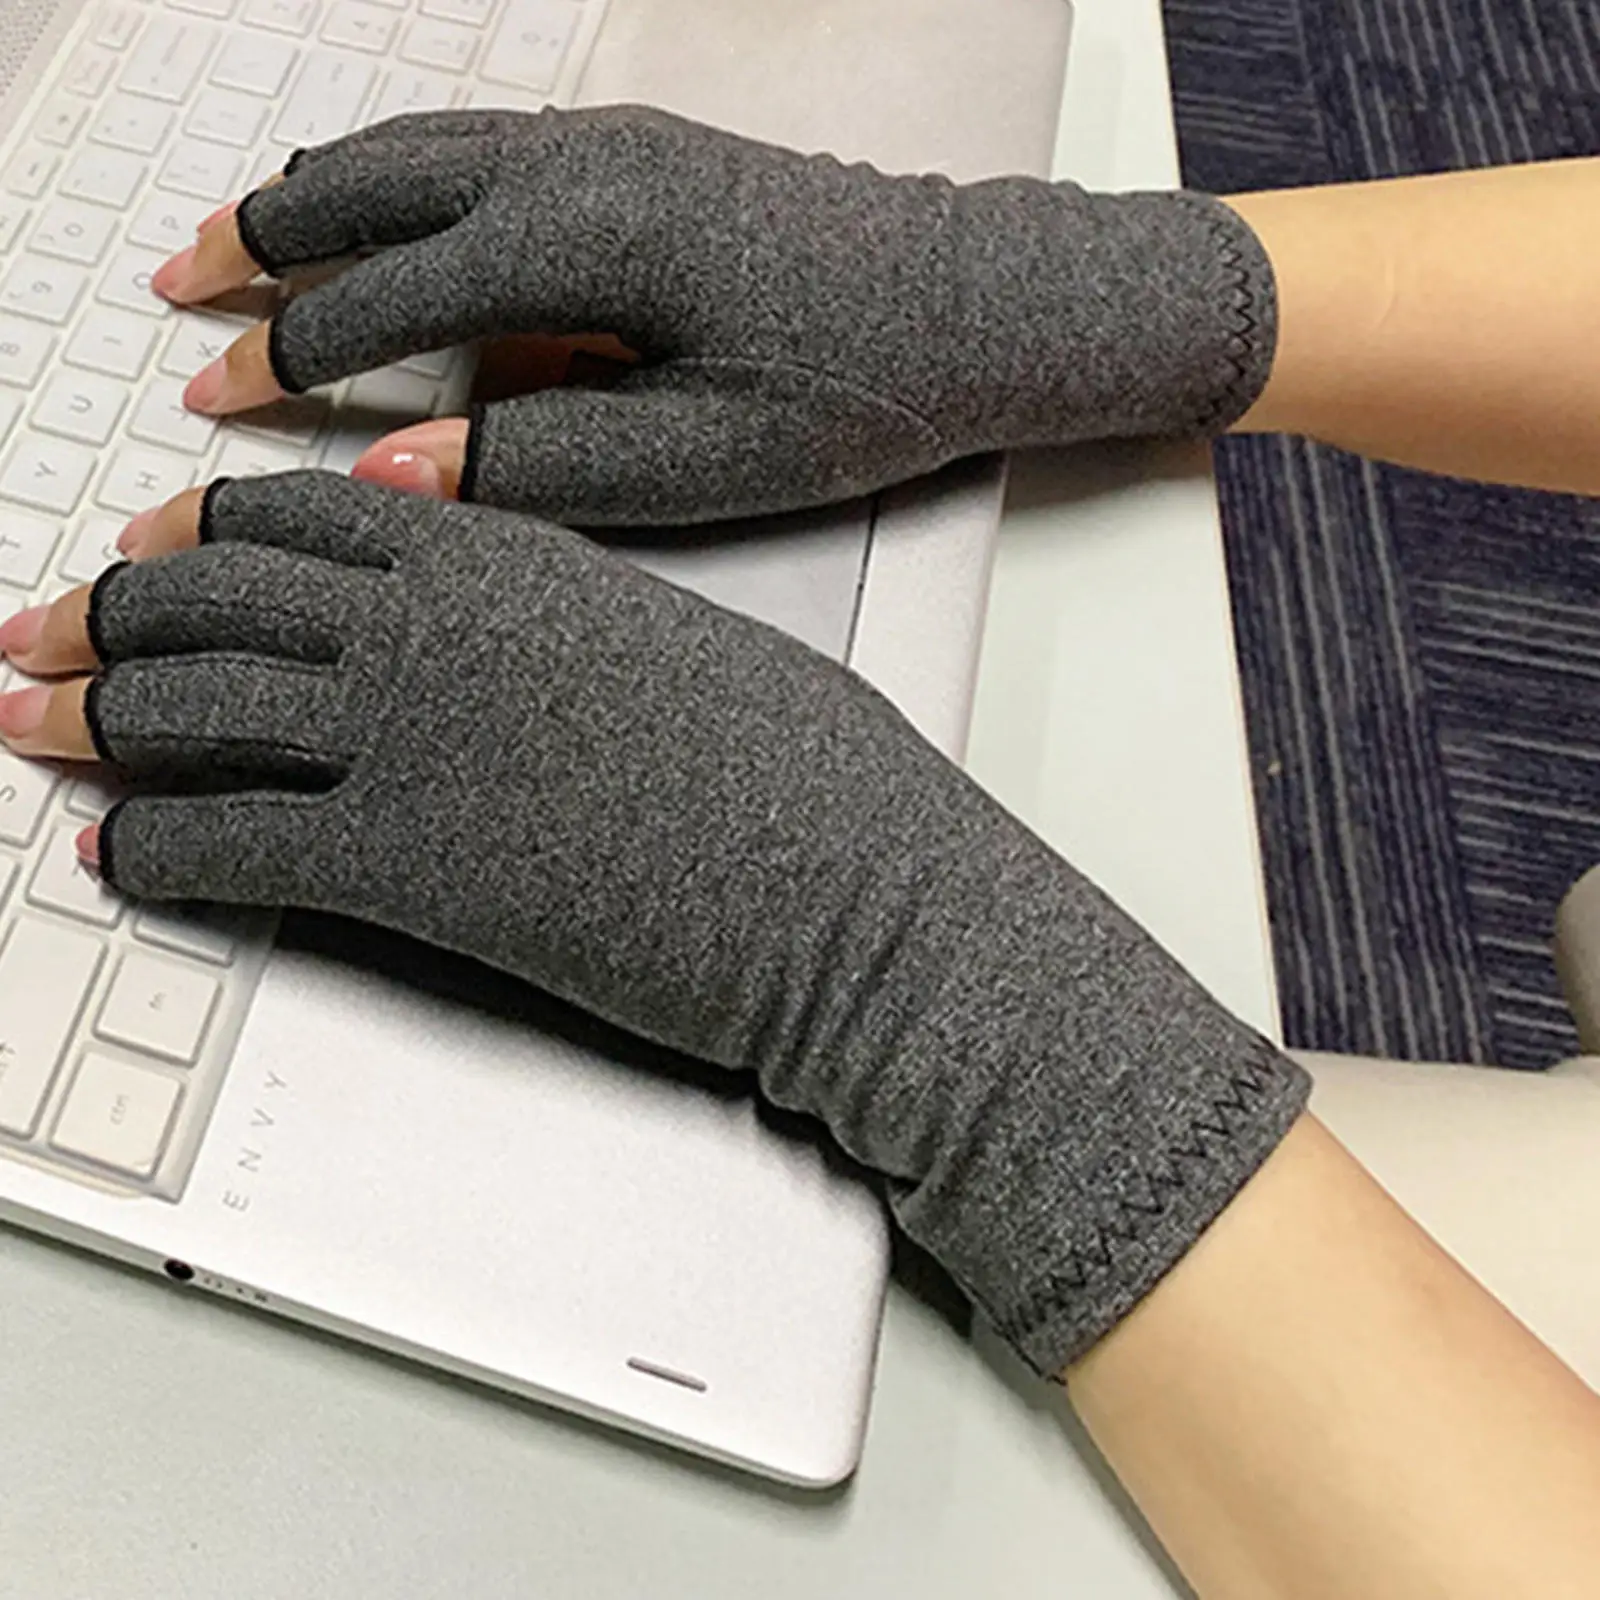 Fingerless Arthritis Compression Gloves Half Finger Support Arthritis Gloves for Fitness Cycling Training Women and Men